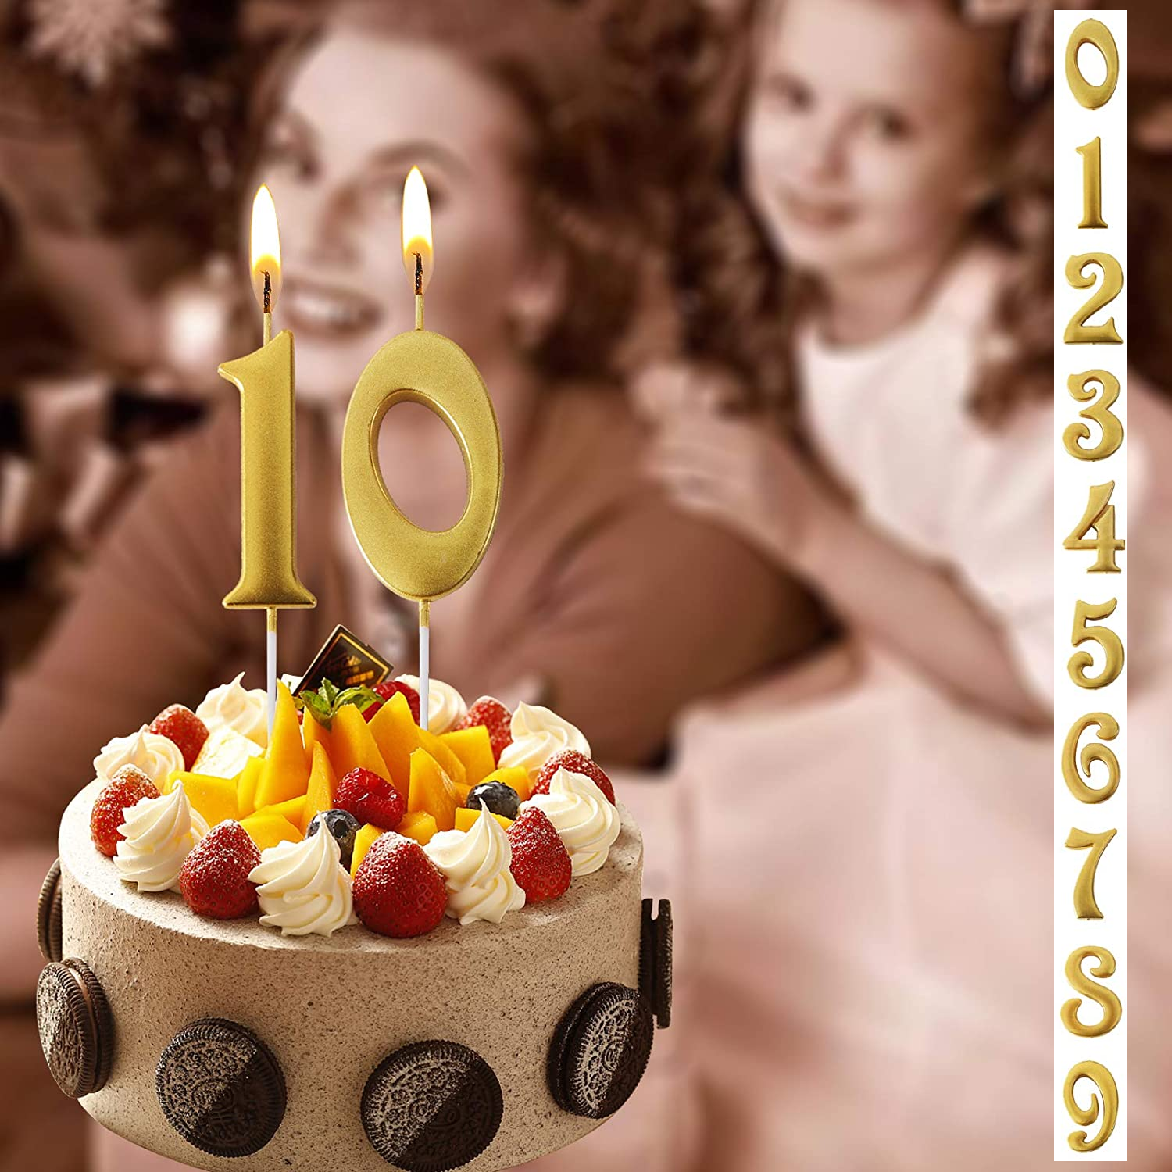 Cake/Cupcake Candle - 'Ornate' gold candle - # 6 - Rampant Coffee Company